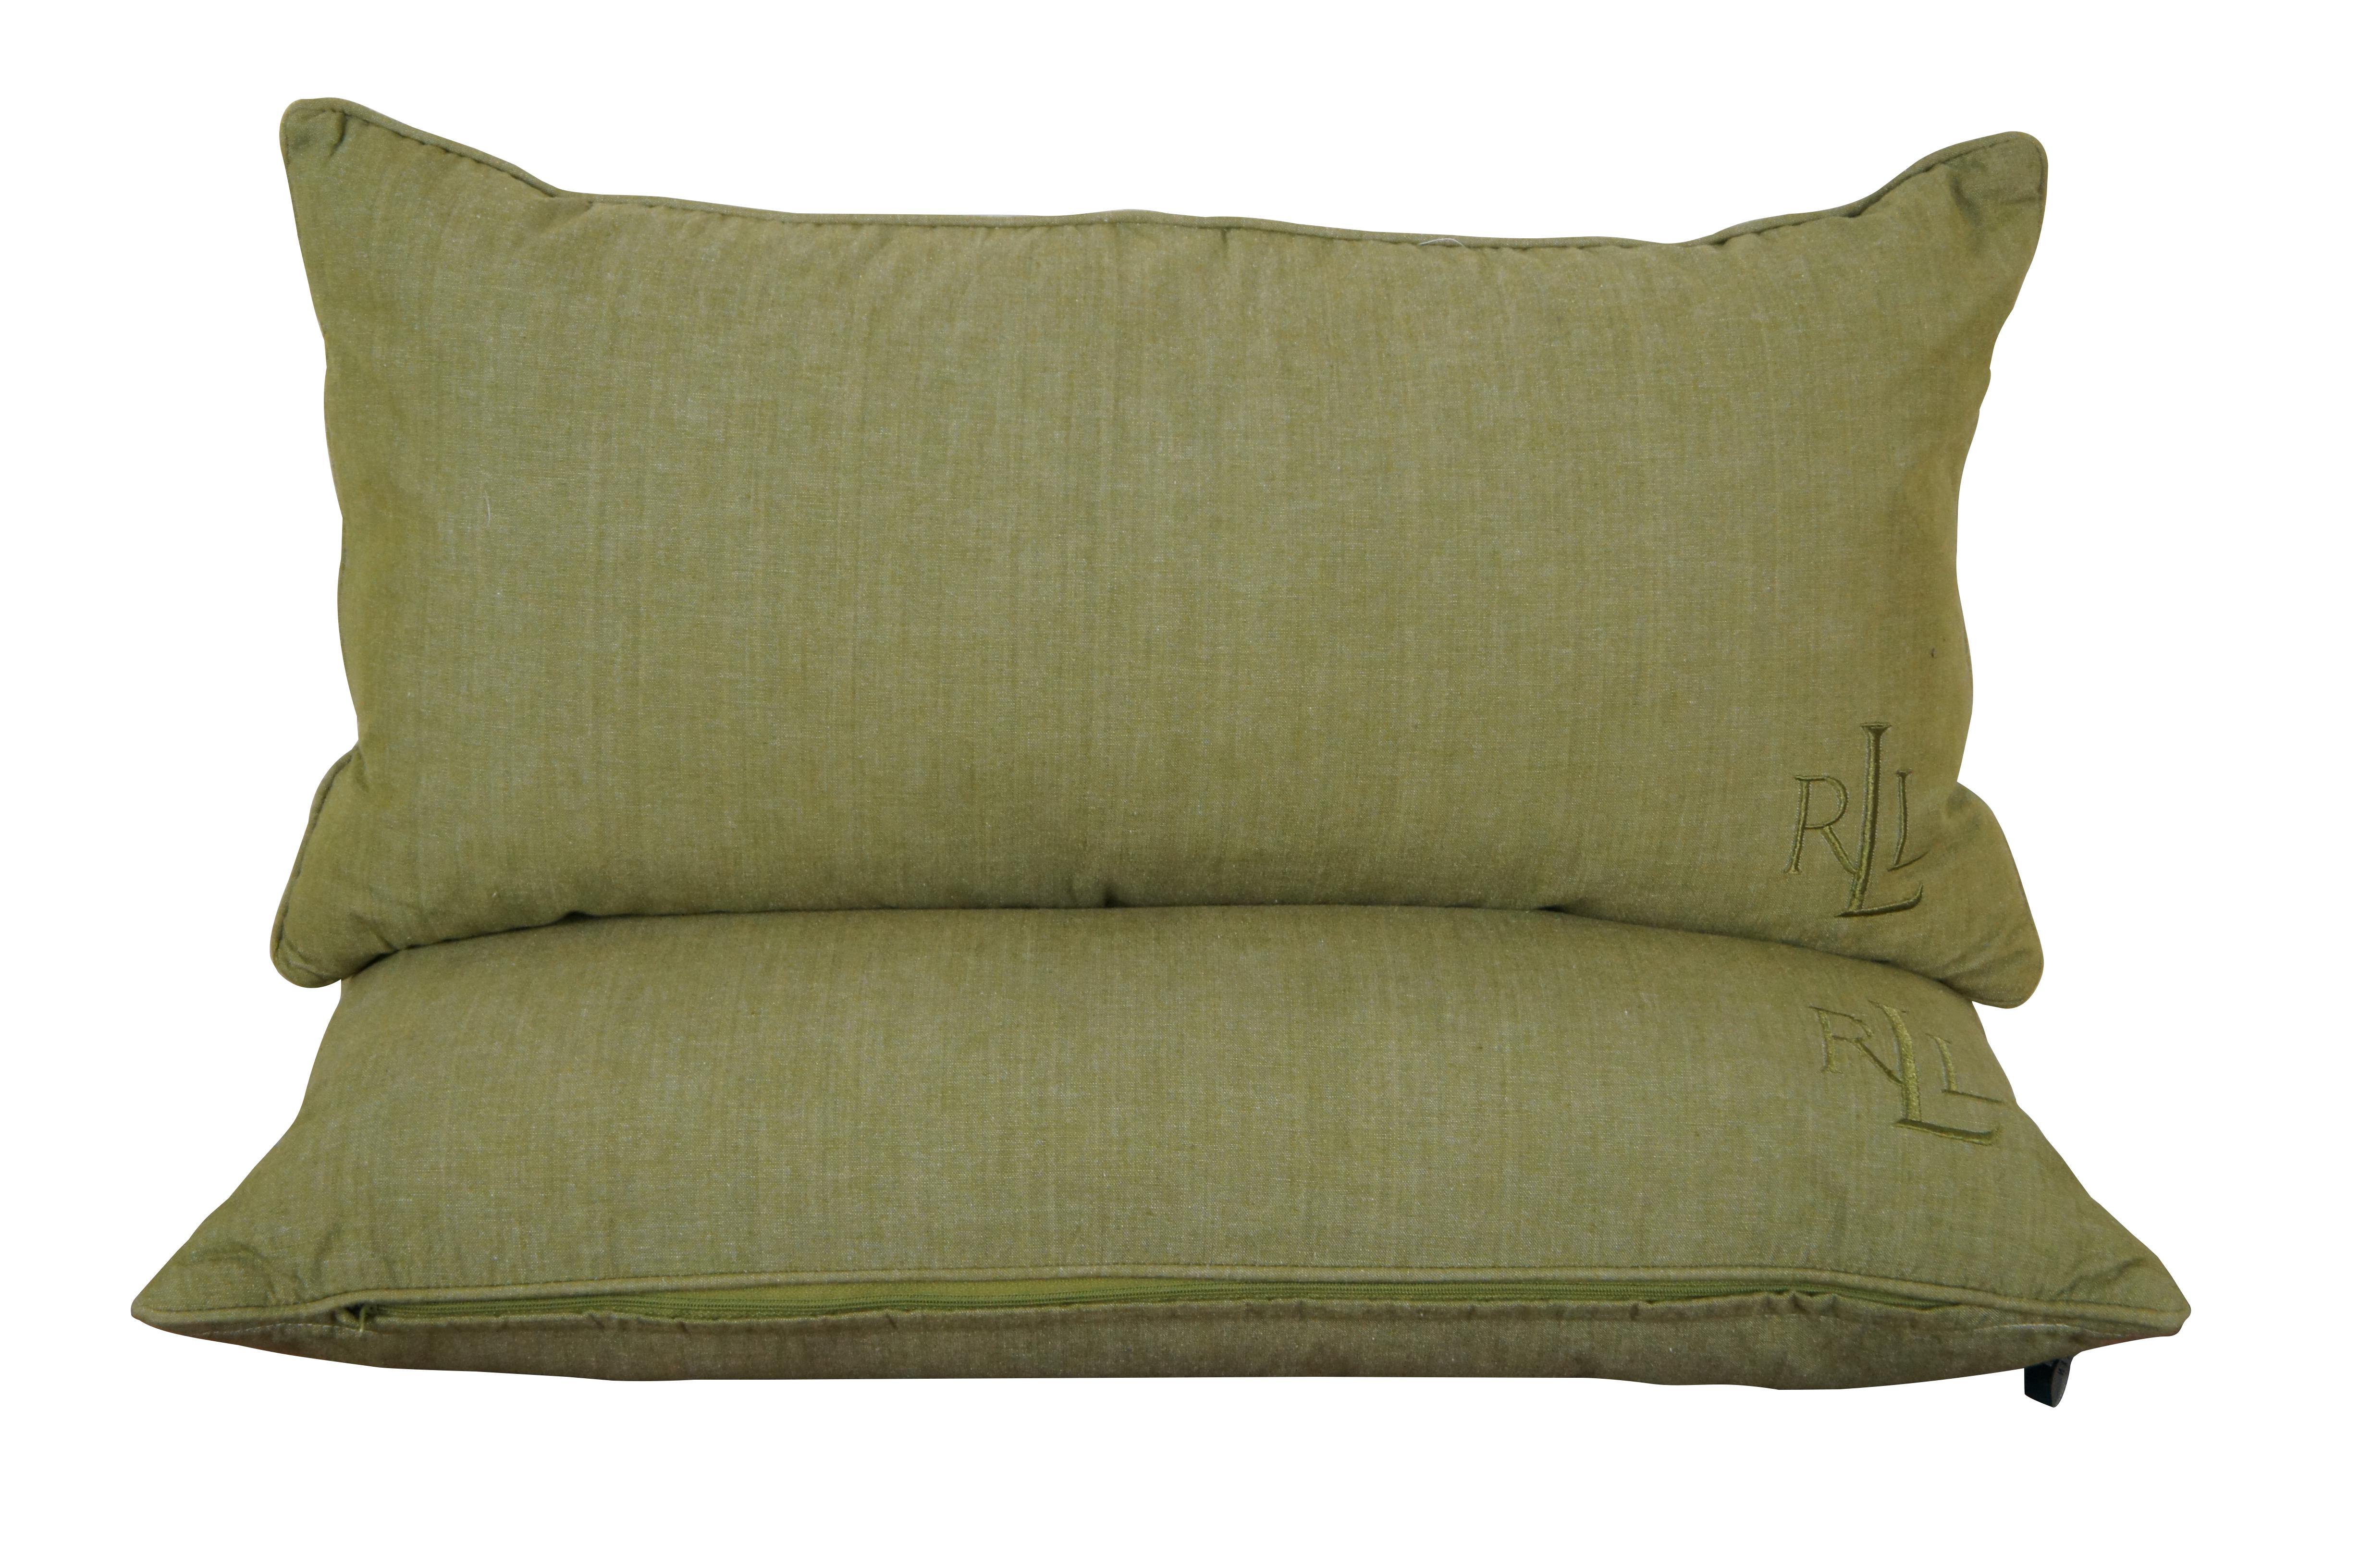 Pair of Lauren by Ralph Lauren light olive green lumbar throw pillows; rectangular with piped edge, LRL monogram in lower right corner, down filled, zipper closure. Measures: 24 x 14